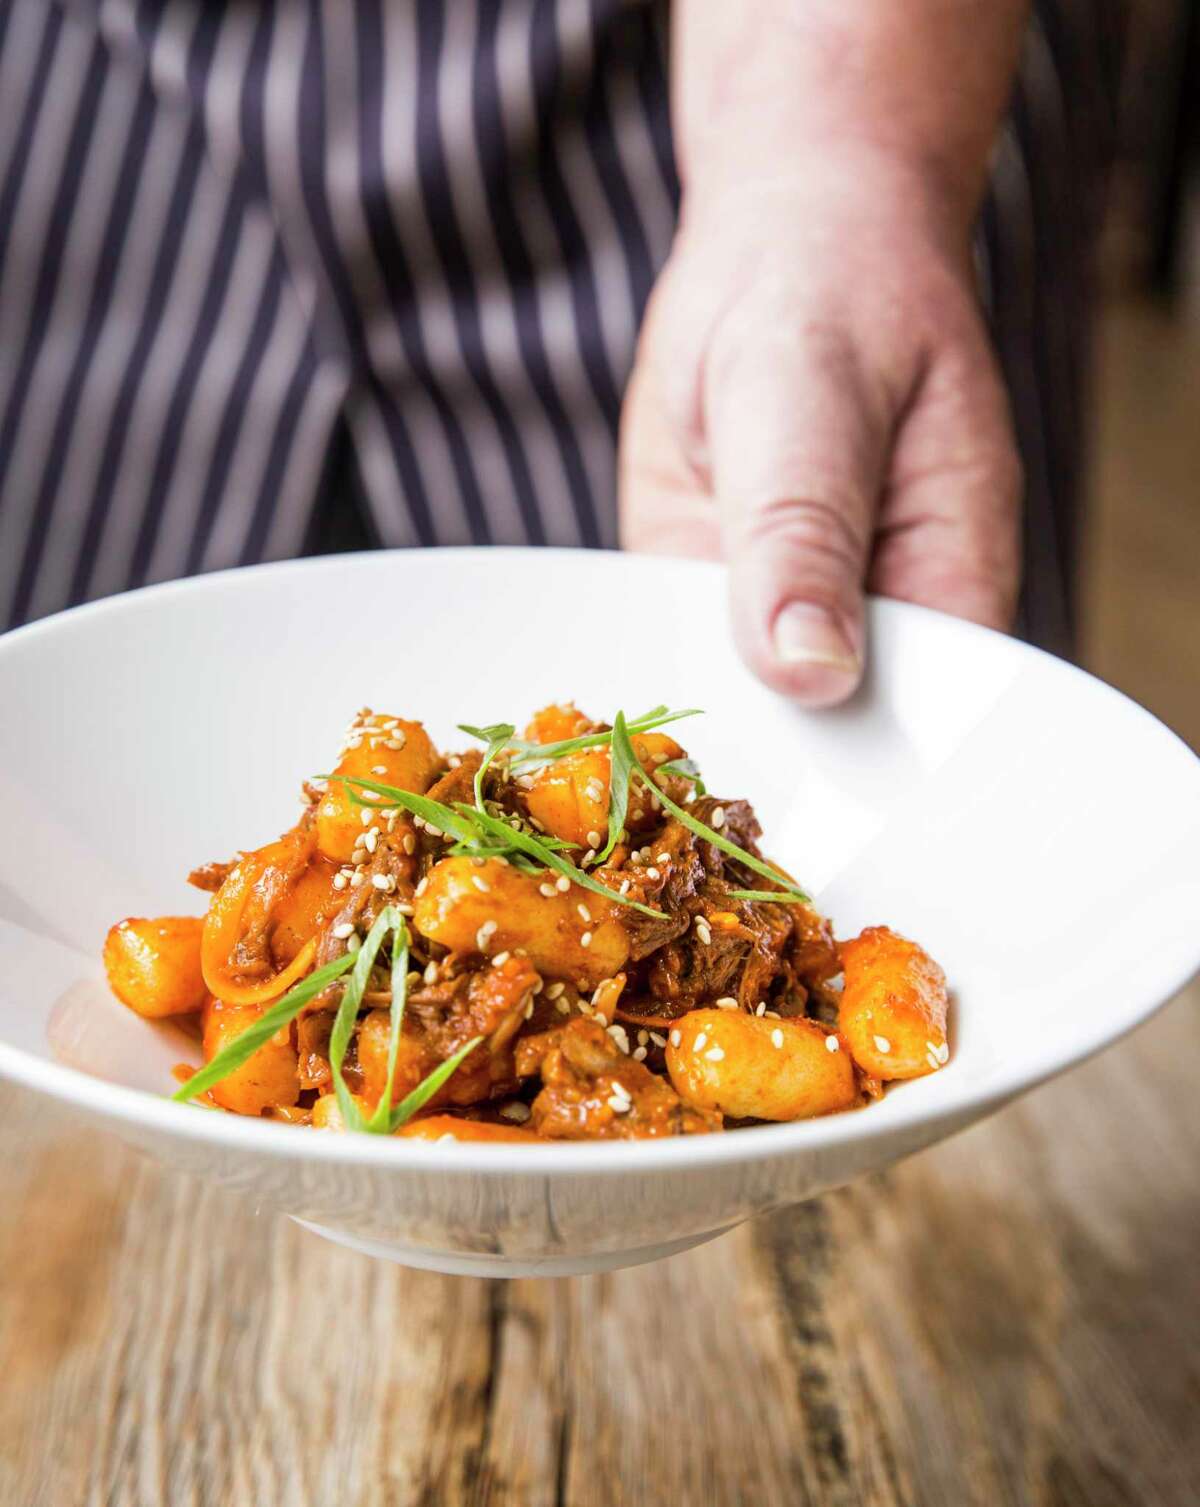 Korean Braised Goat Dumplings are chef Chris Shepherd's signature dish.